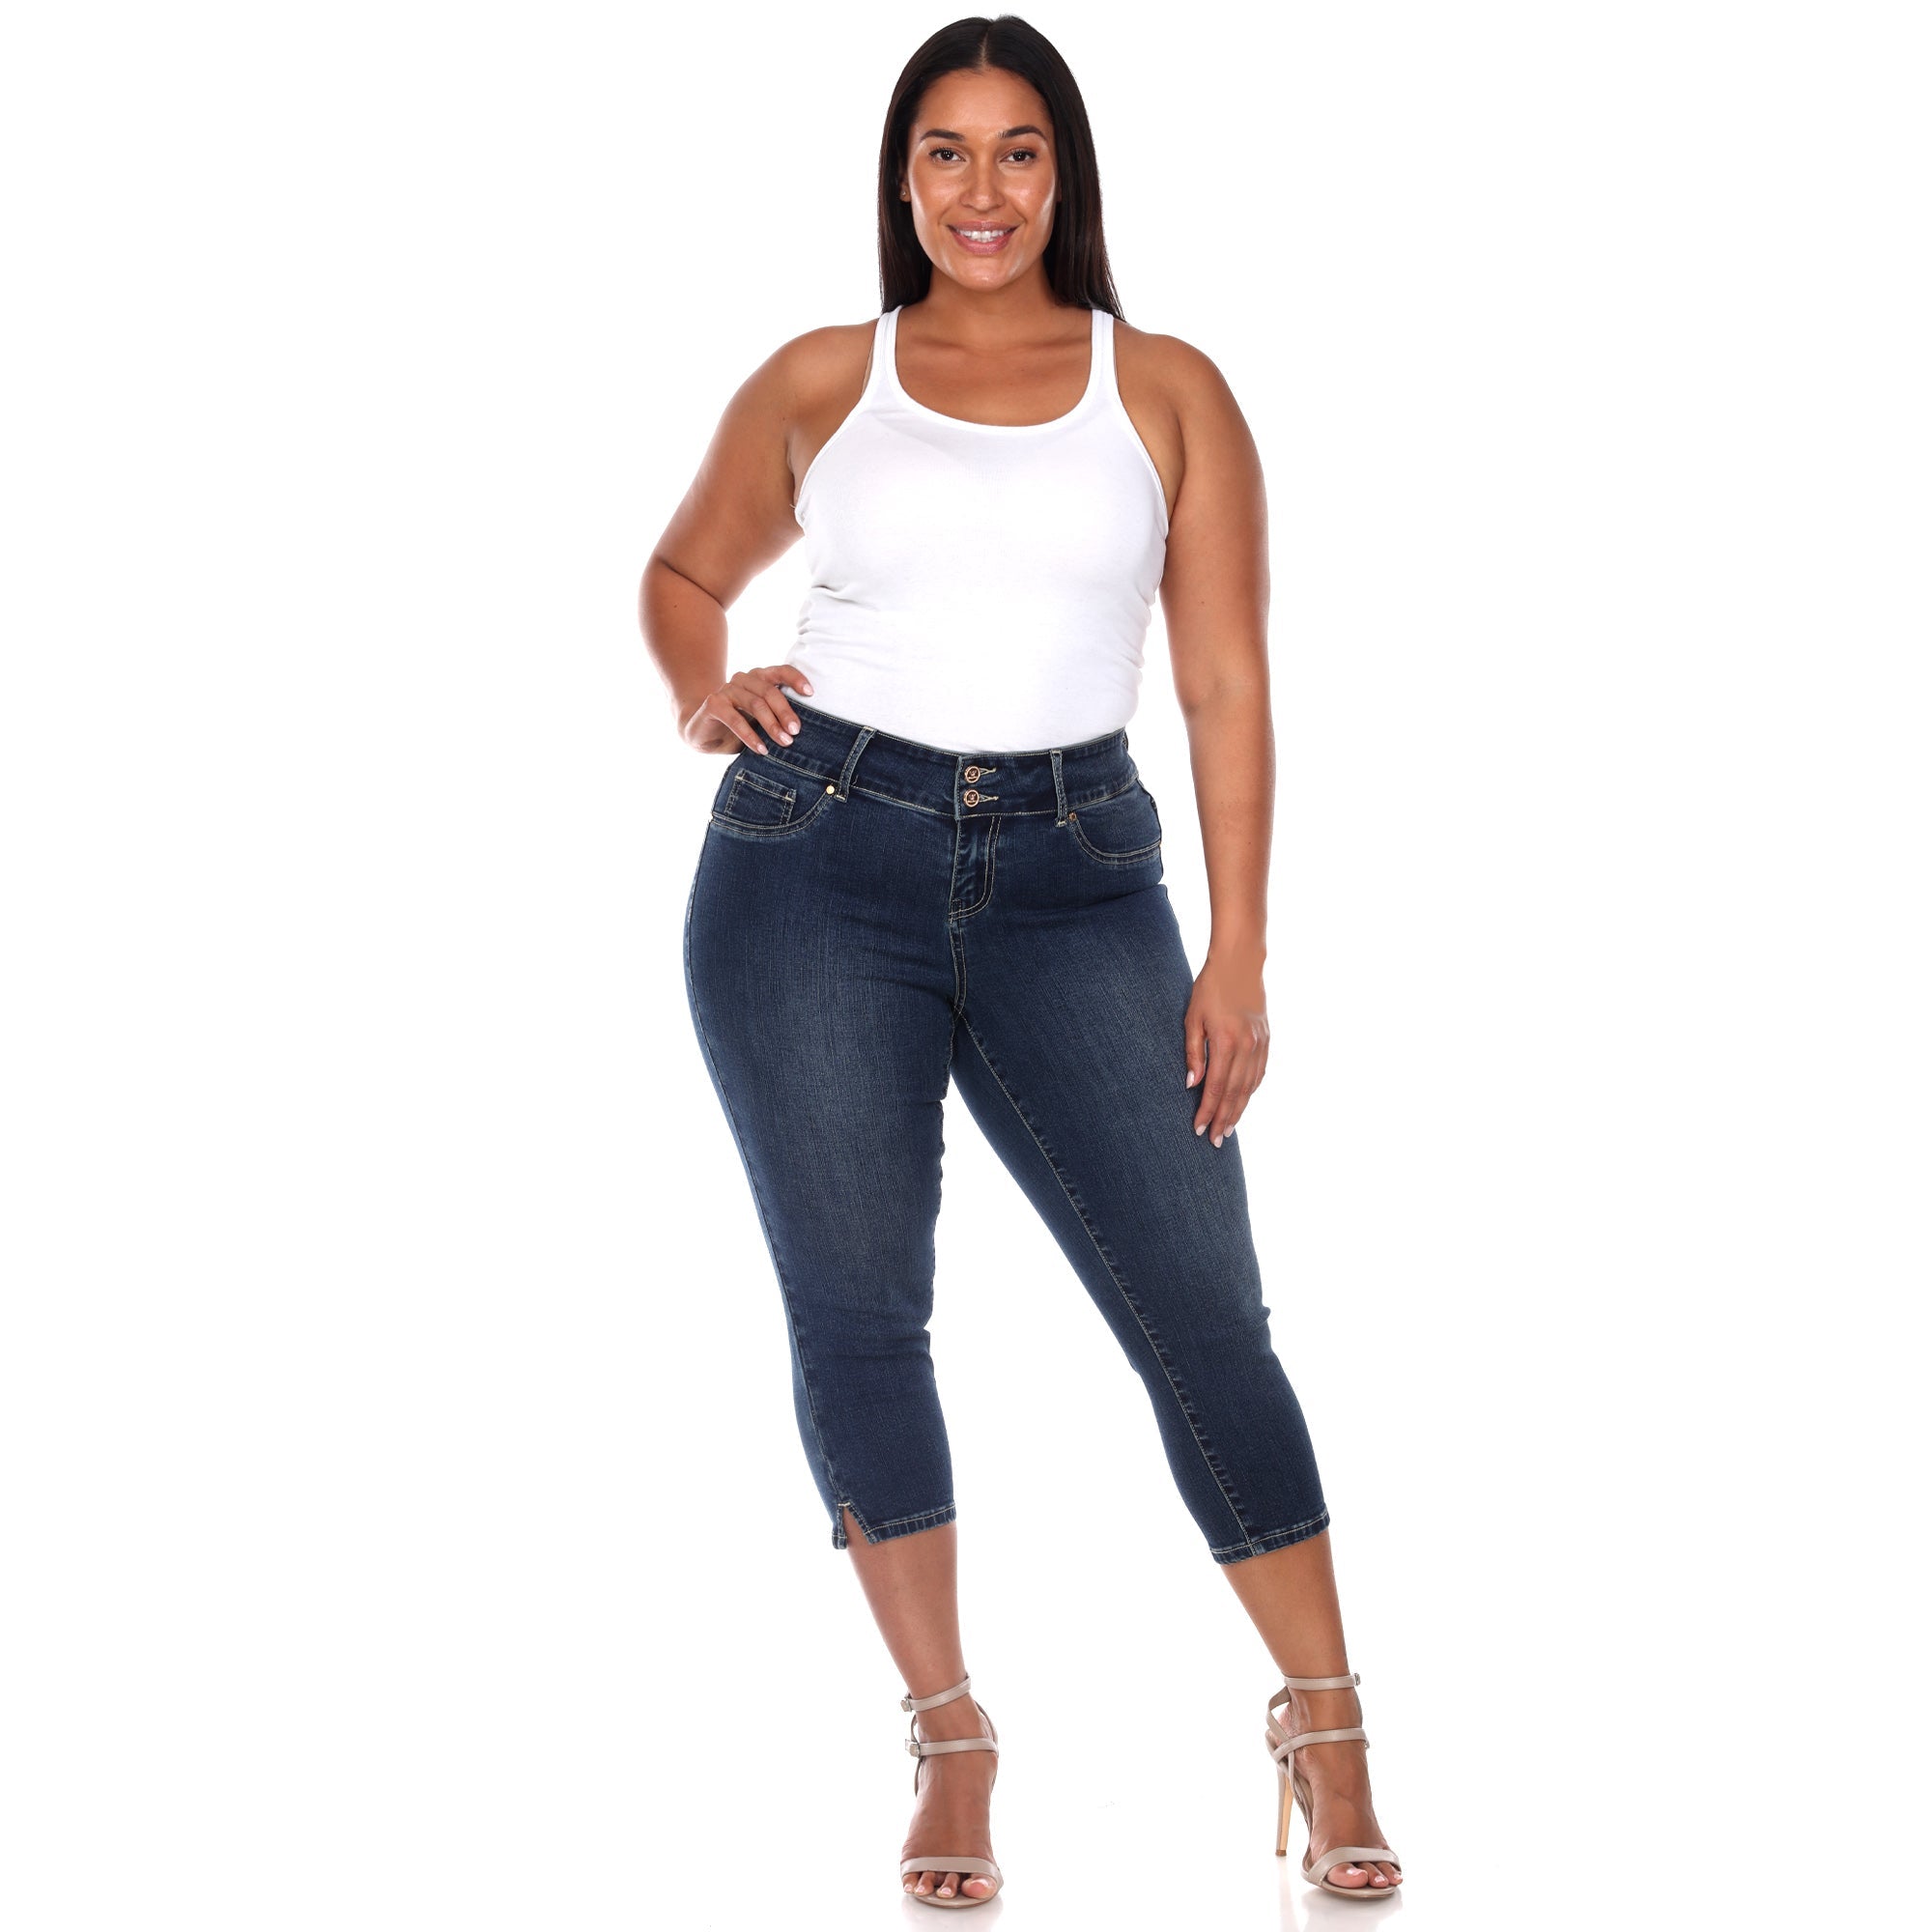 Women's Plus Size Capri Jeans Yellow 16 - White Mark